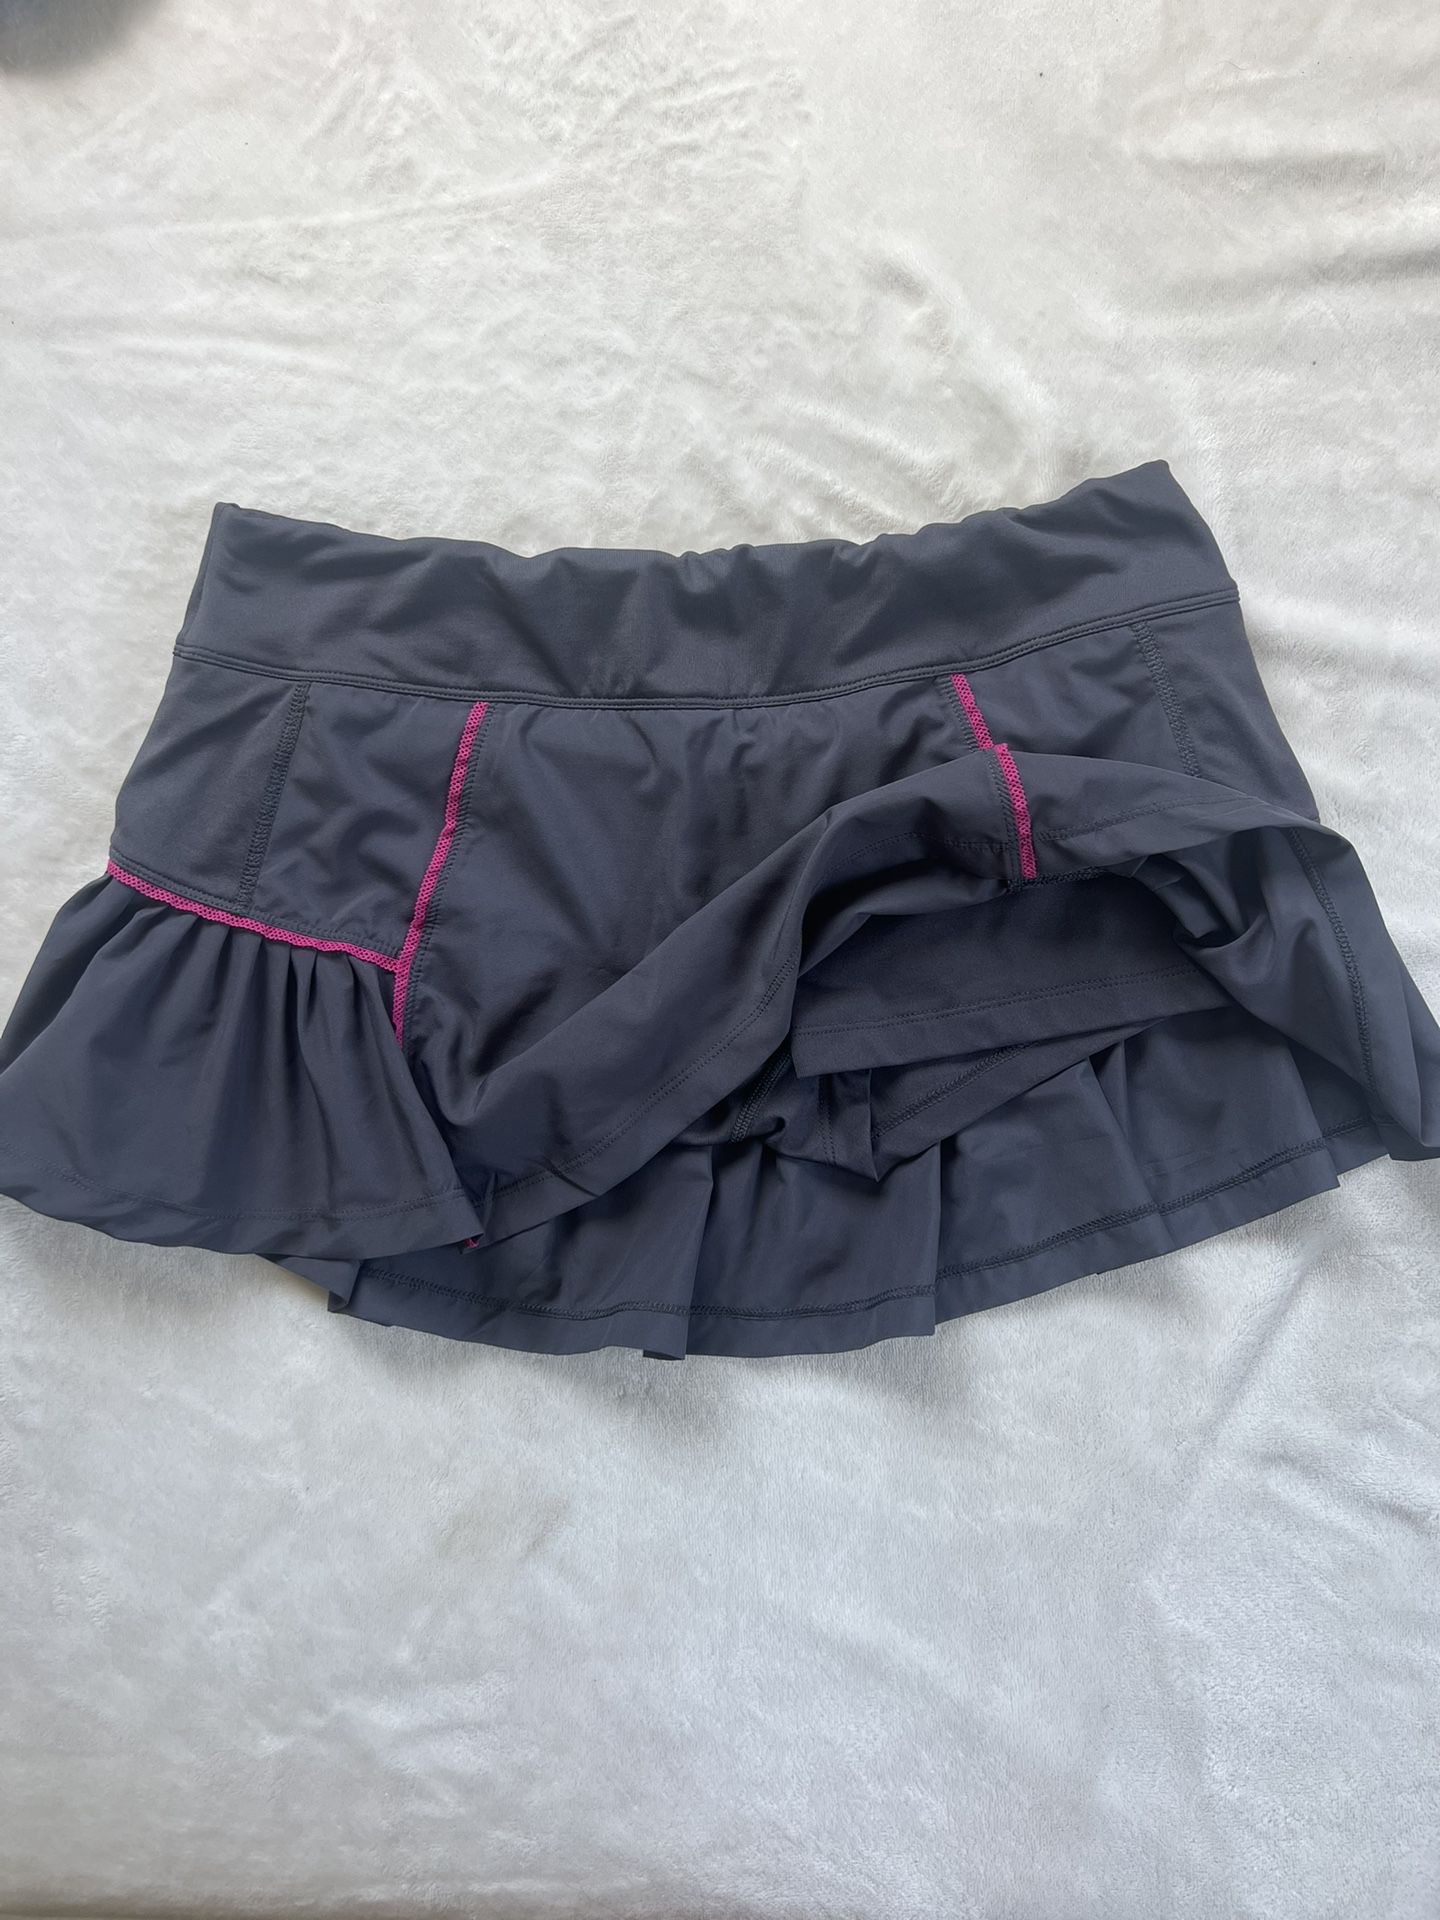 Athletic Sport Skirt Size M 